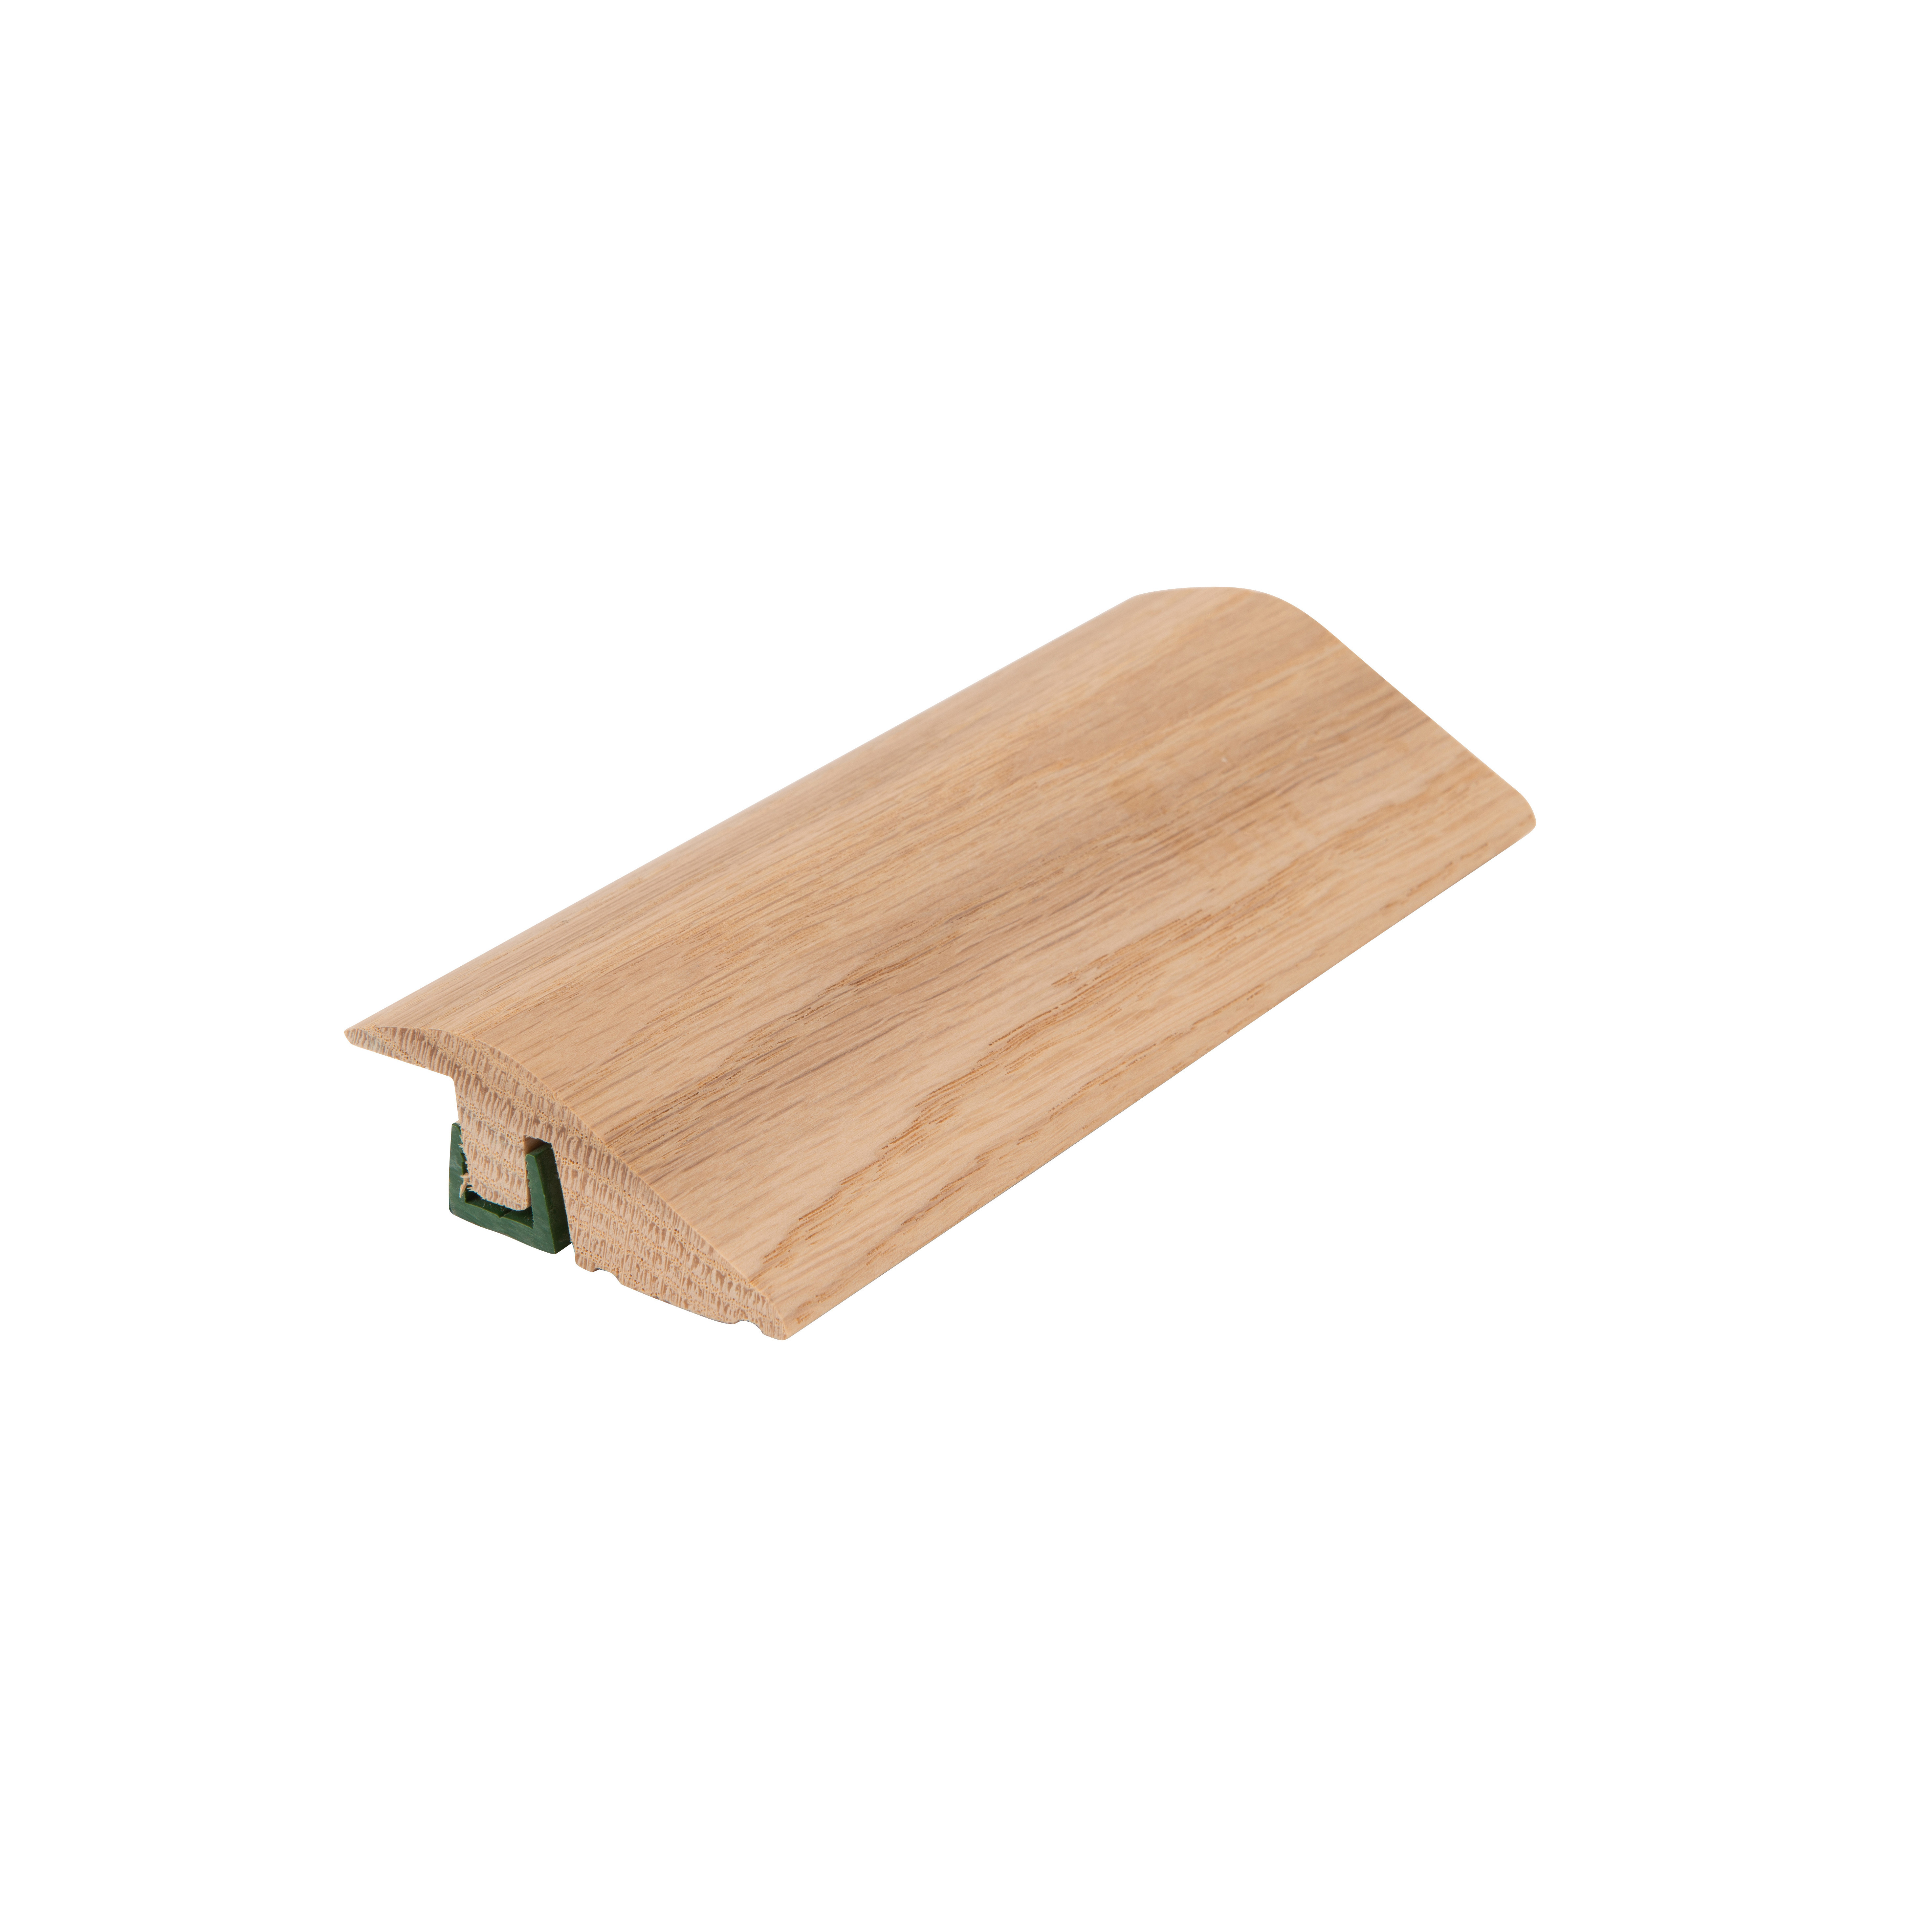 woodfix-rebated-r-section-20mm-rebate-wood-threshold-wood